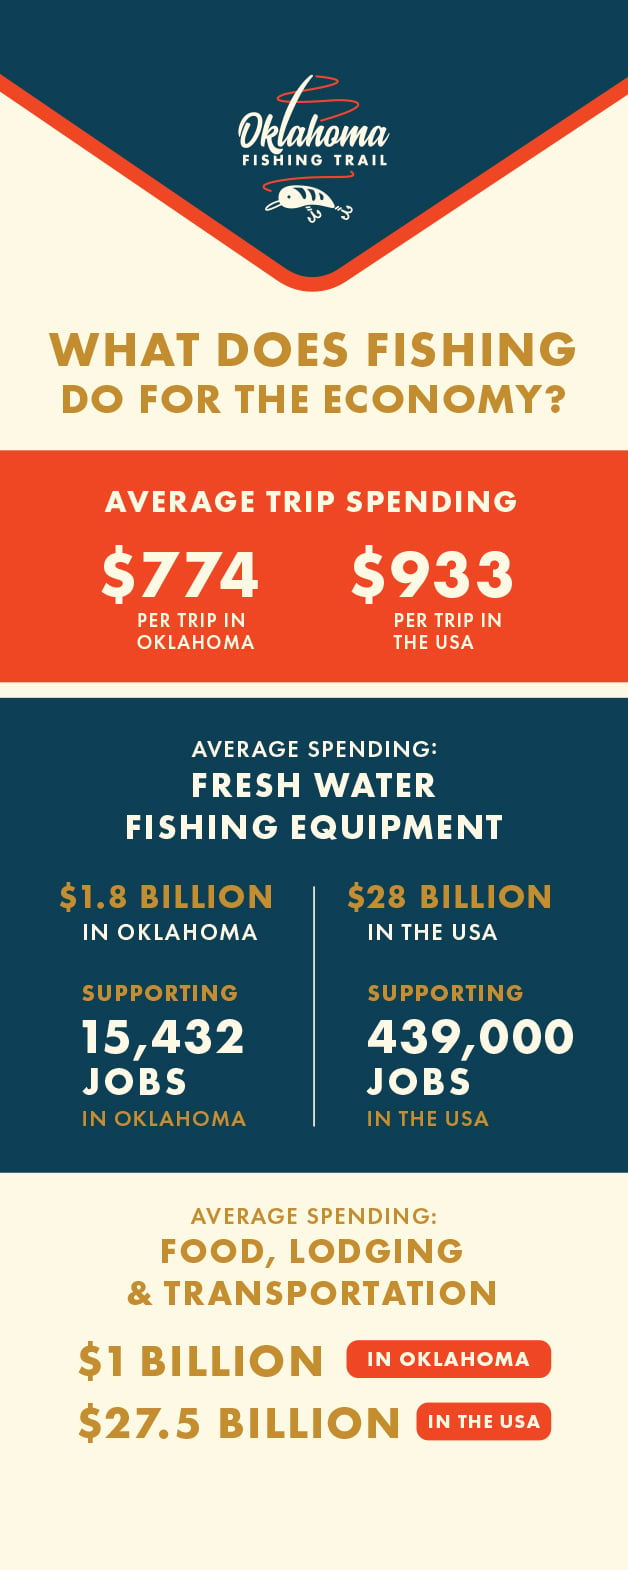 Oklahoma Tourism and Recreation Department – Oklahoma Fishing